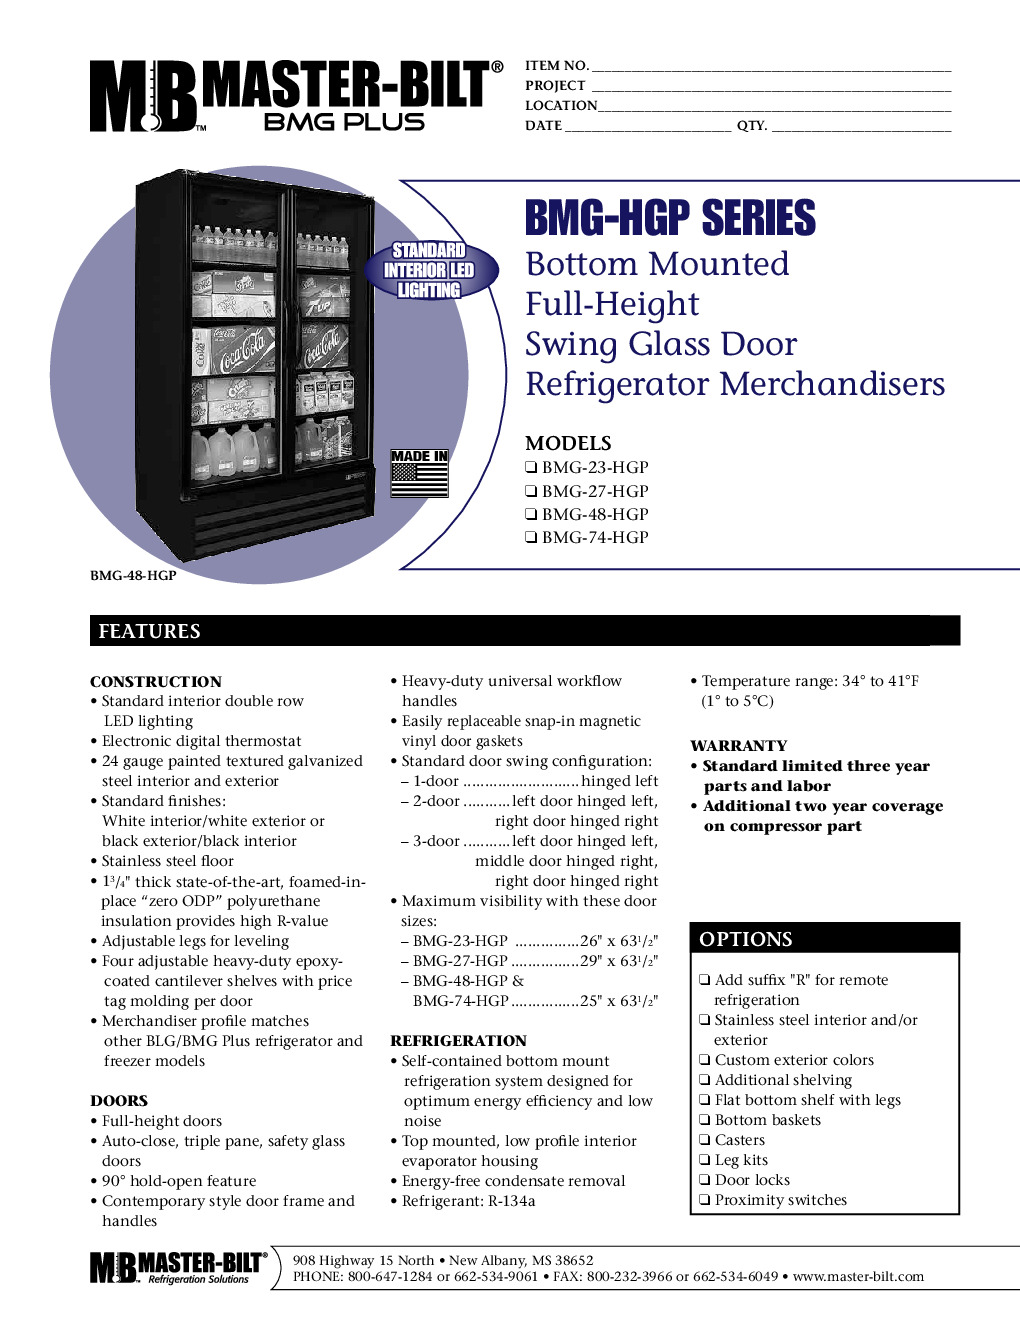 Master-Bilt BMG-27-HGP Merchandiser Refrigerator